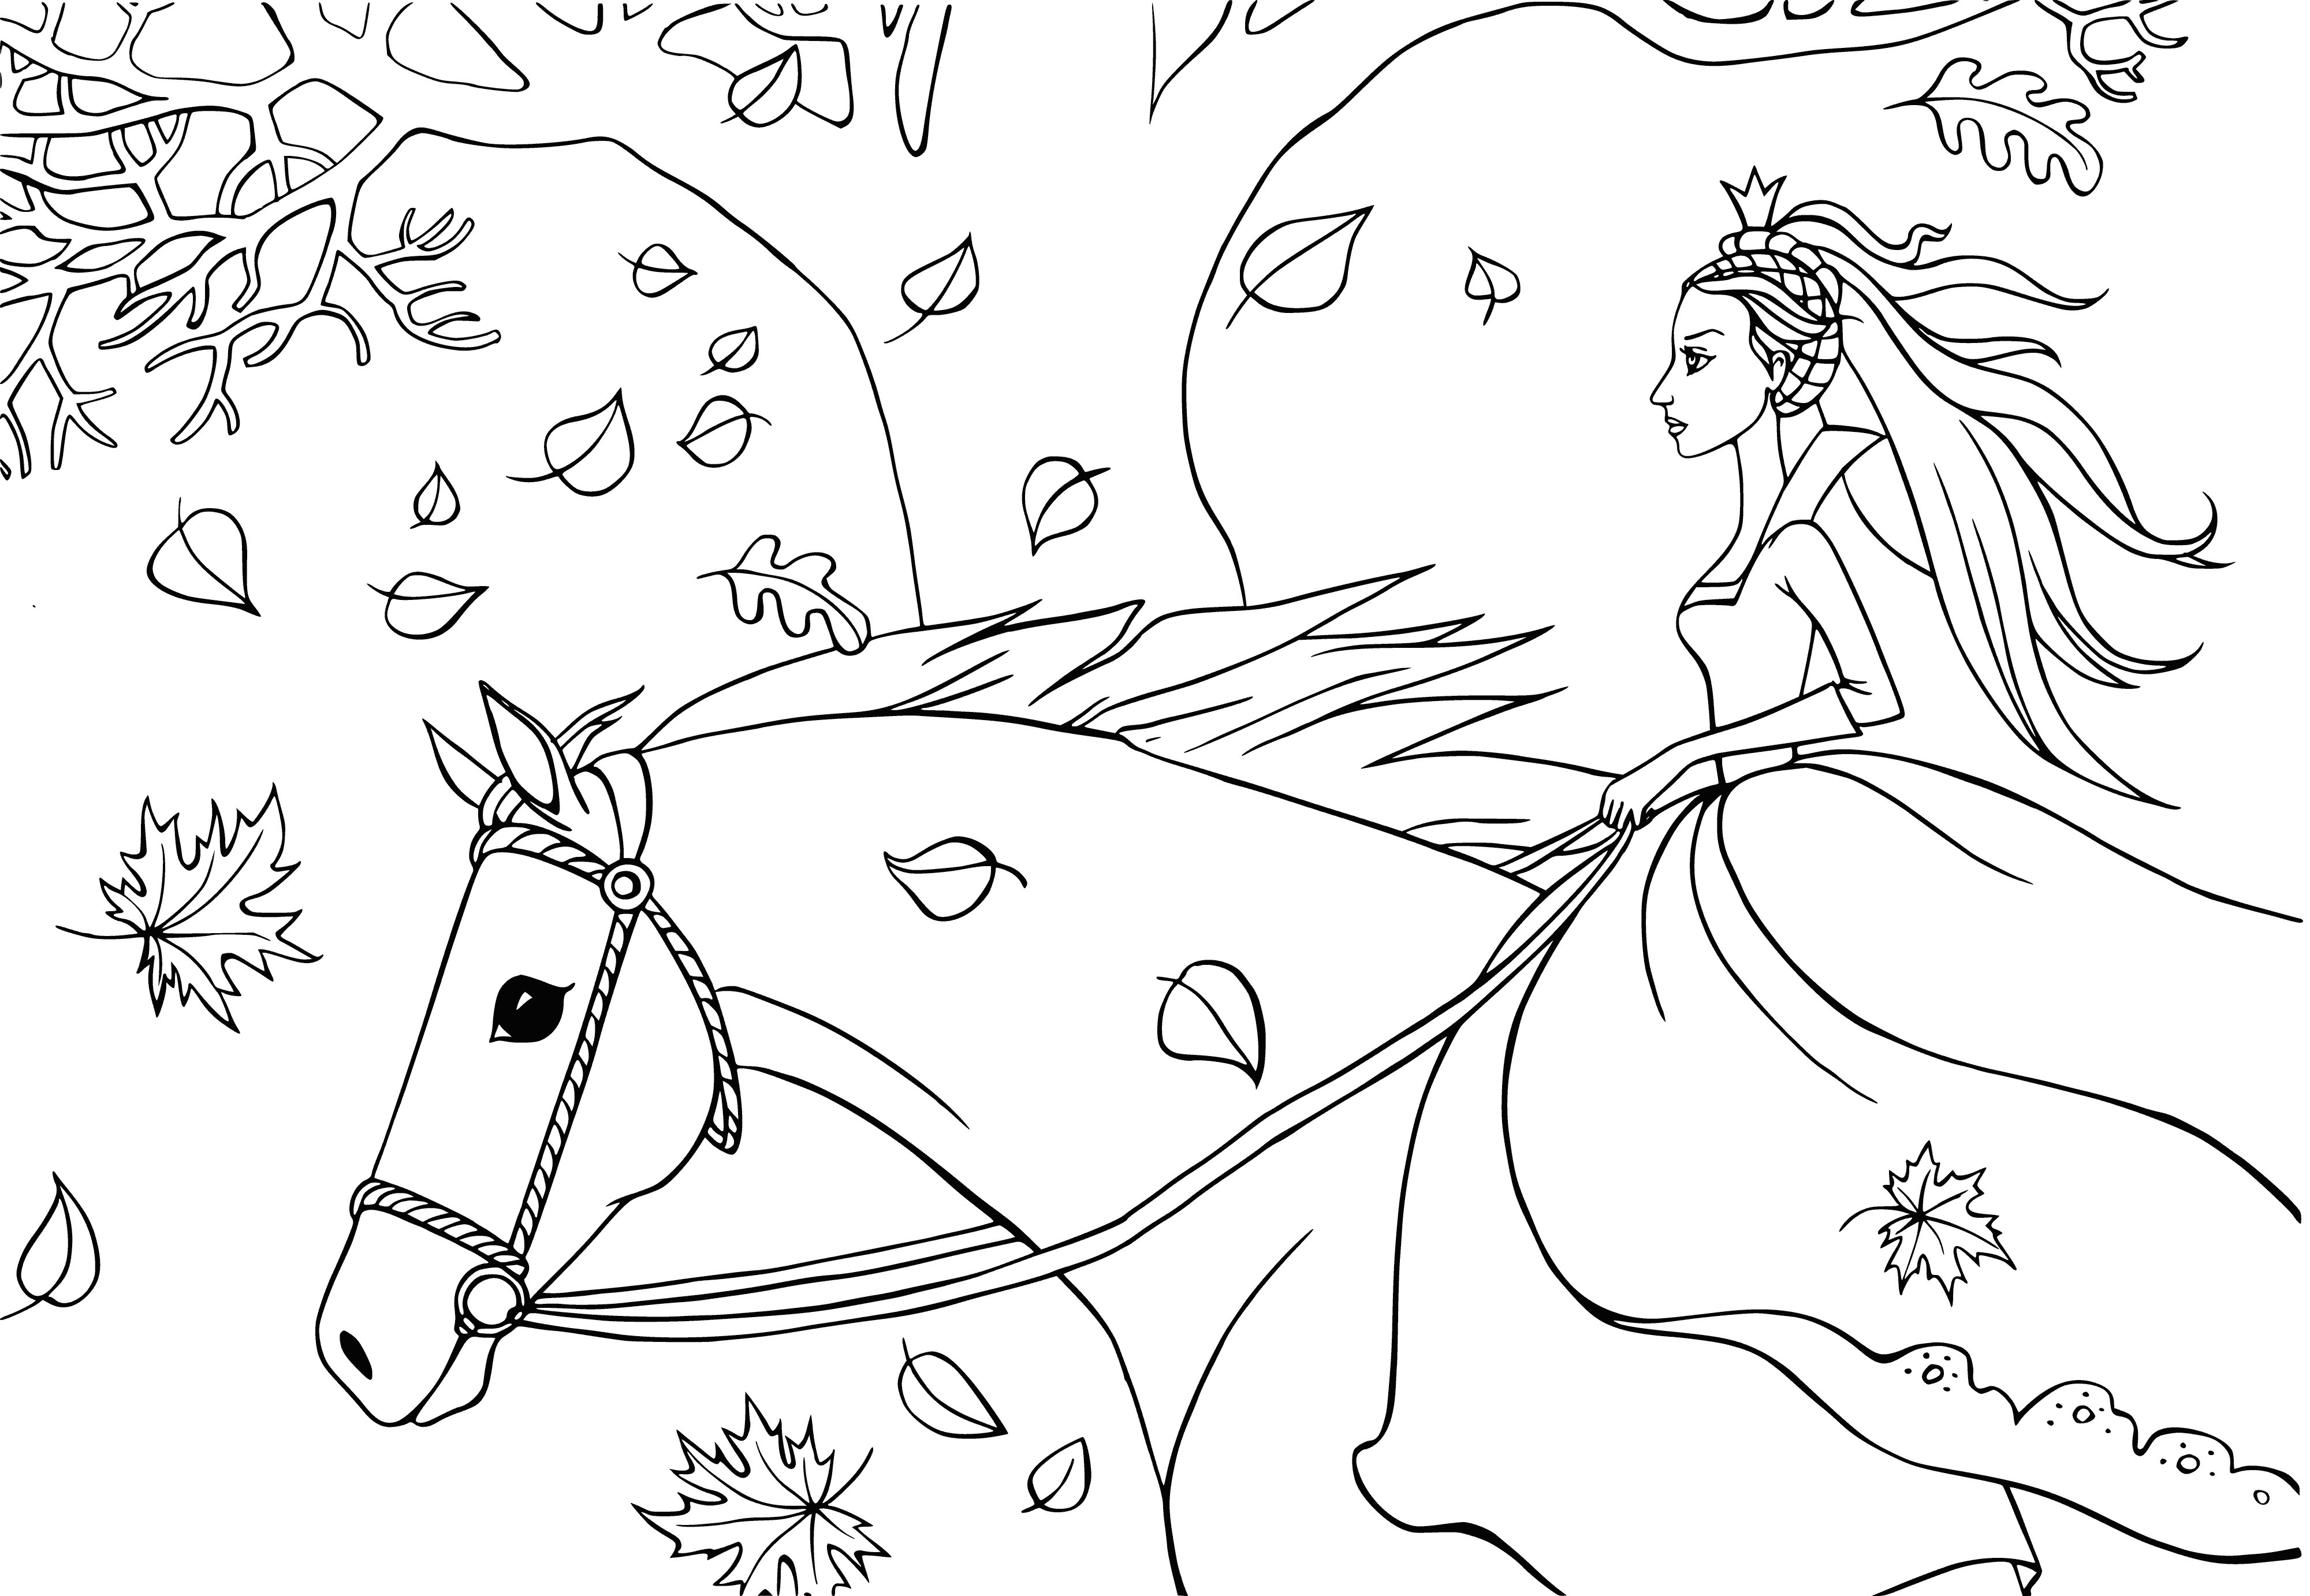 Horseback riding coloring page